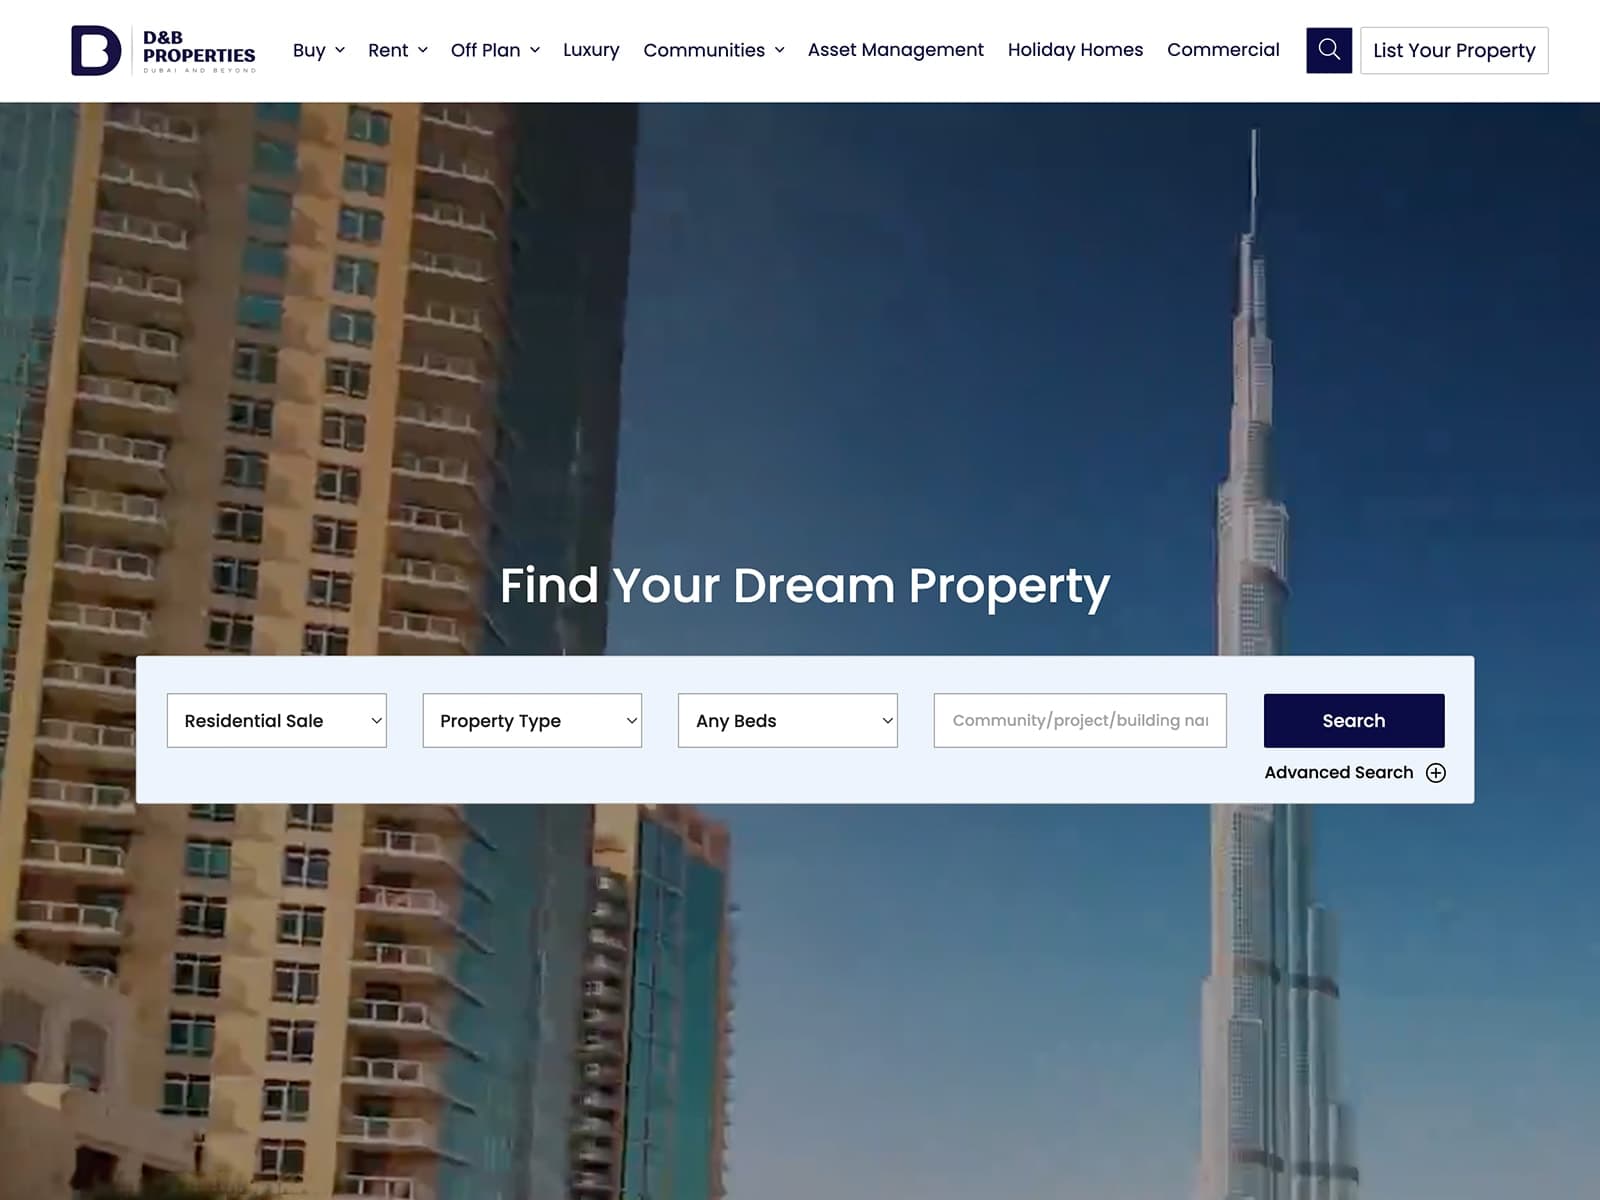 D and B Properties website homepage